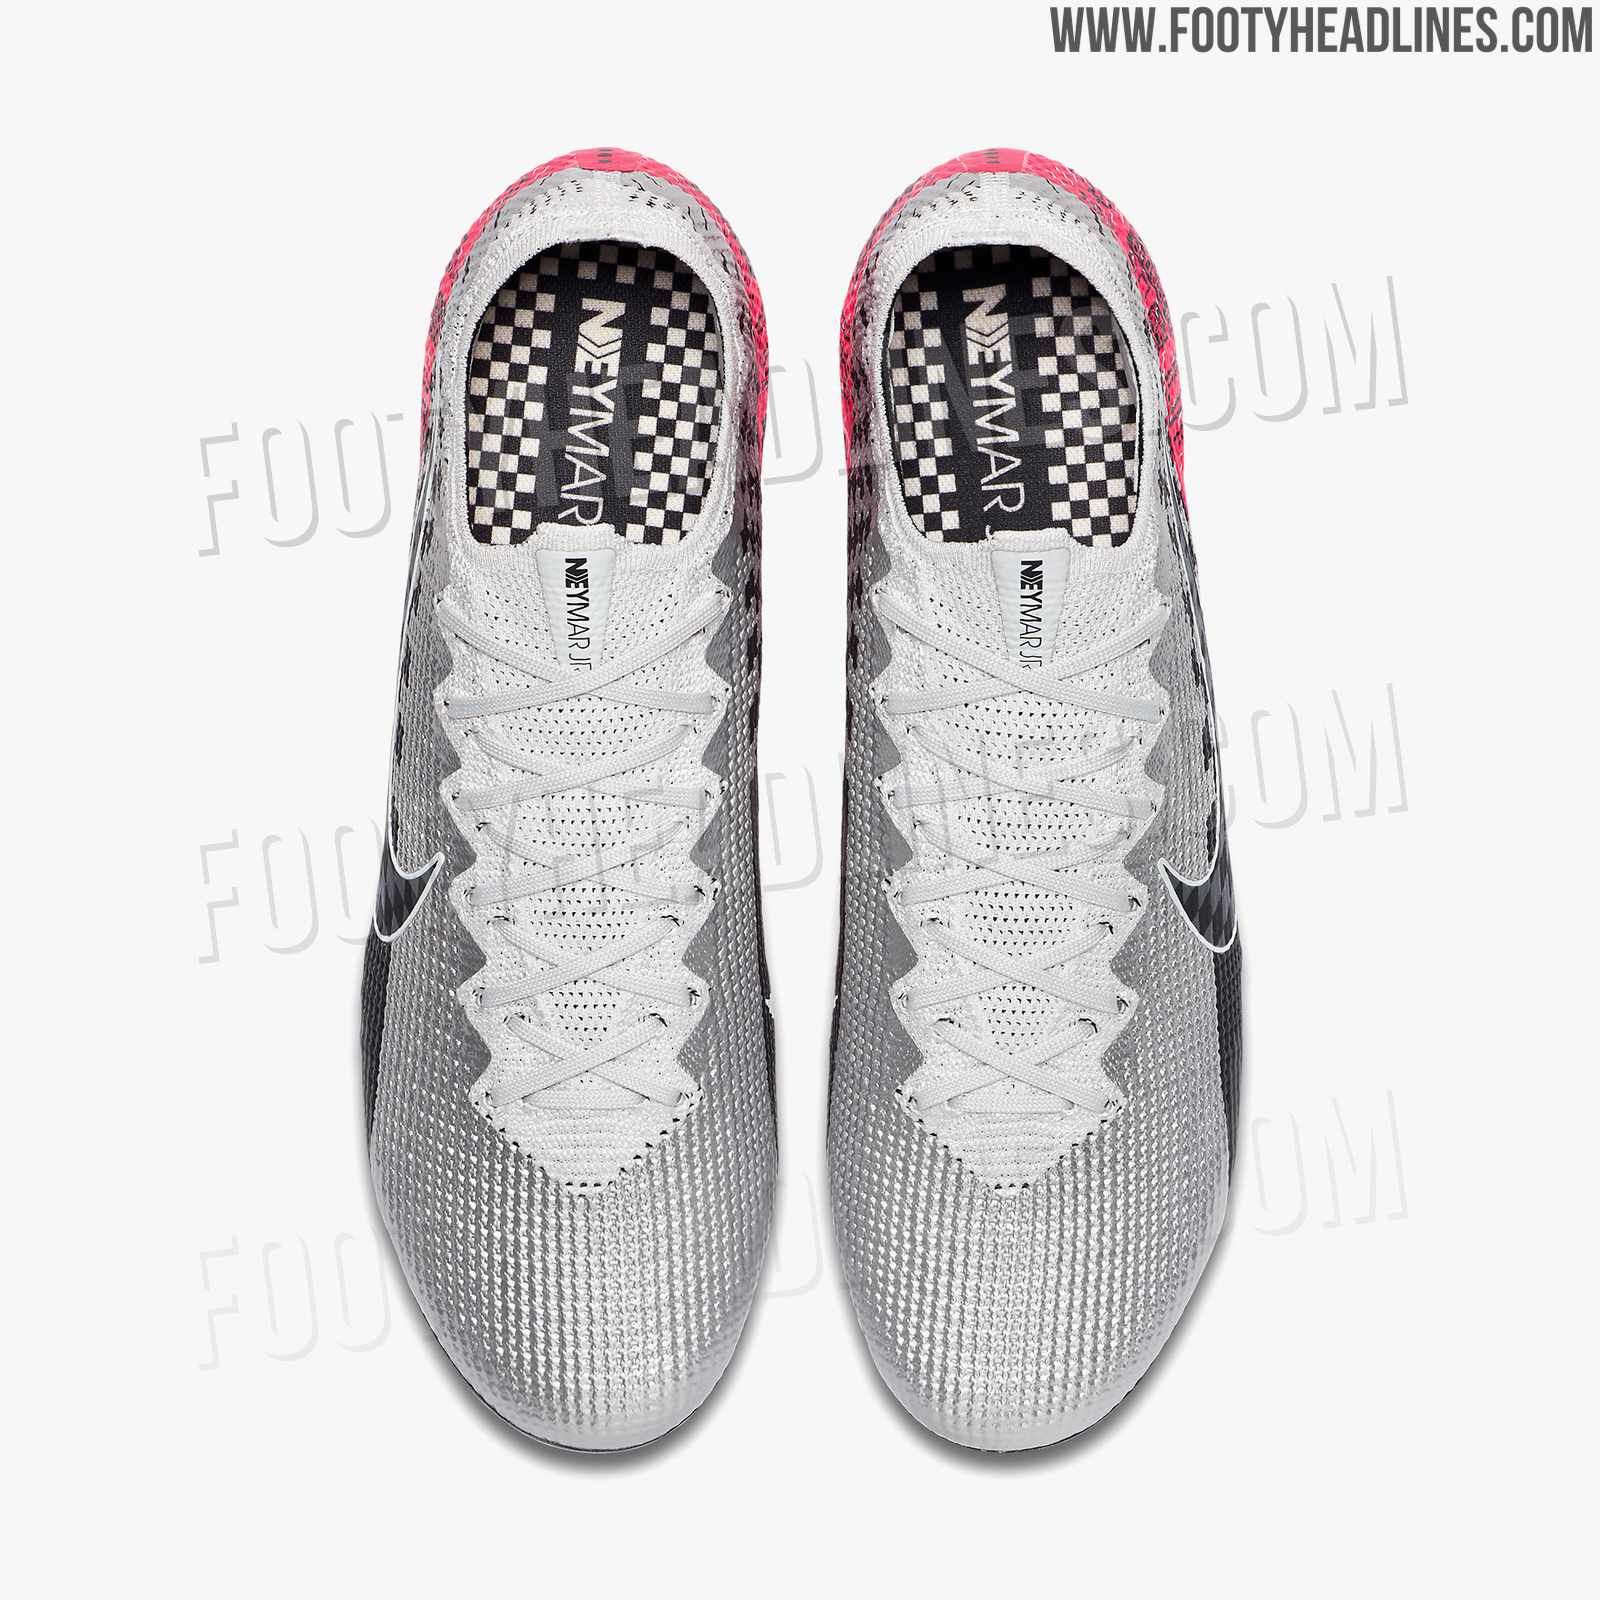 Nike Mercurial Vapor I Football Boots SG Size 10 eBay